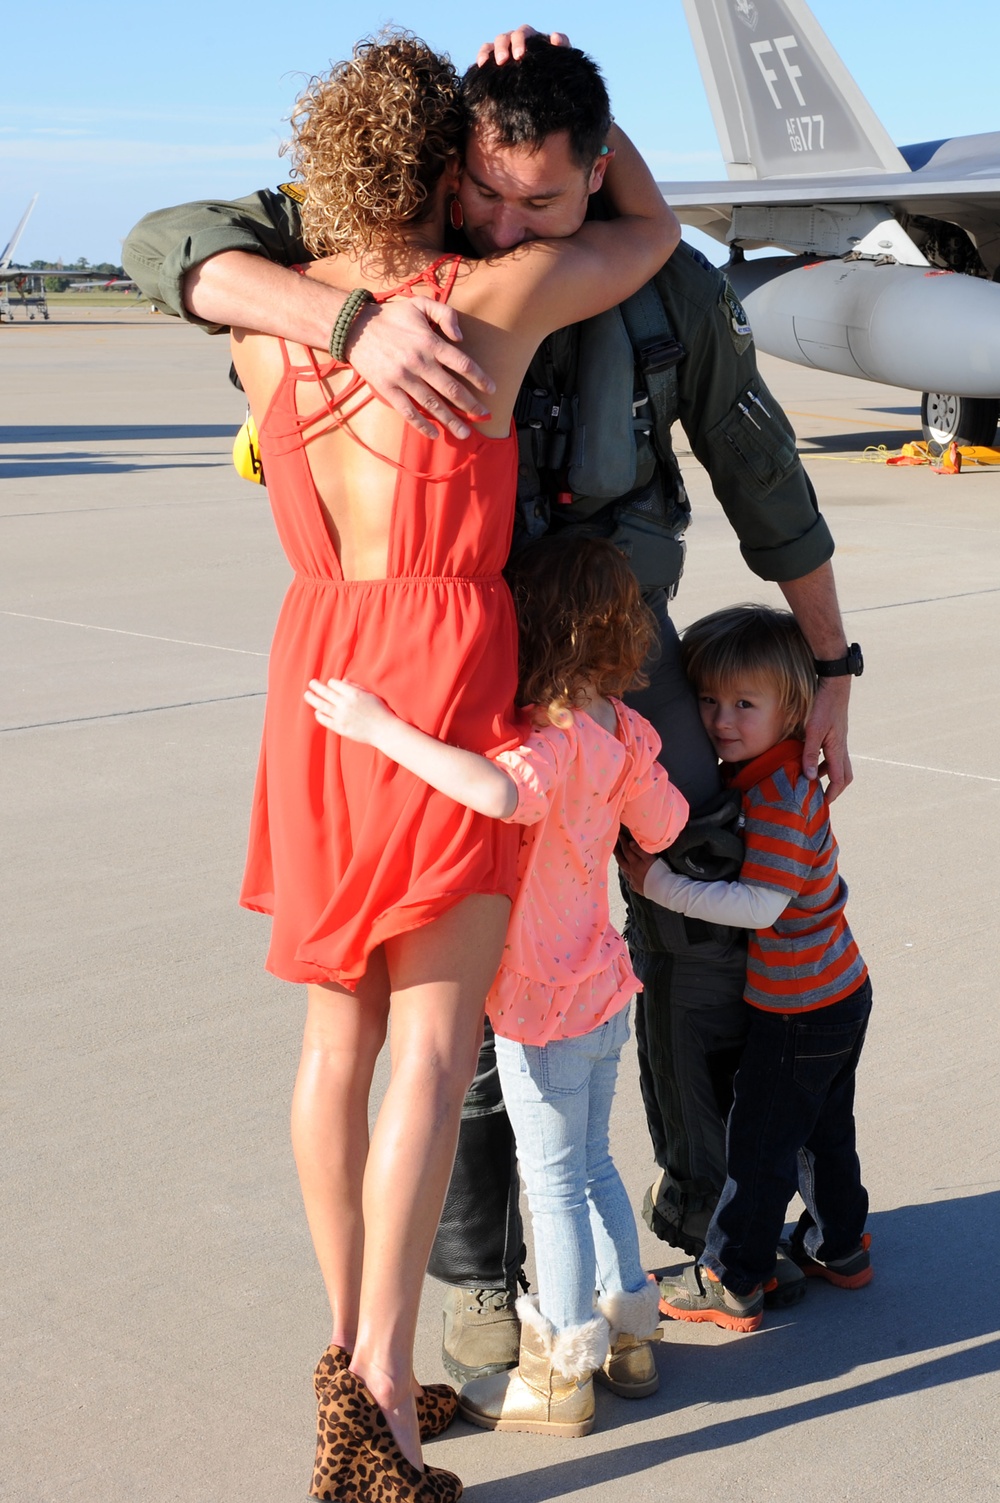 27th FS airmen return home from deployment